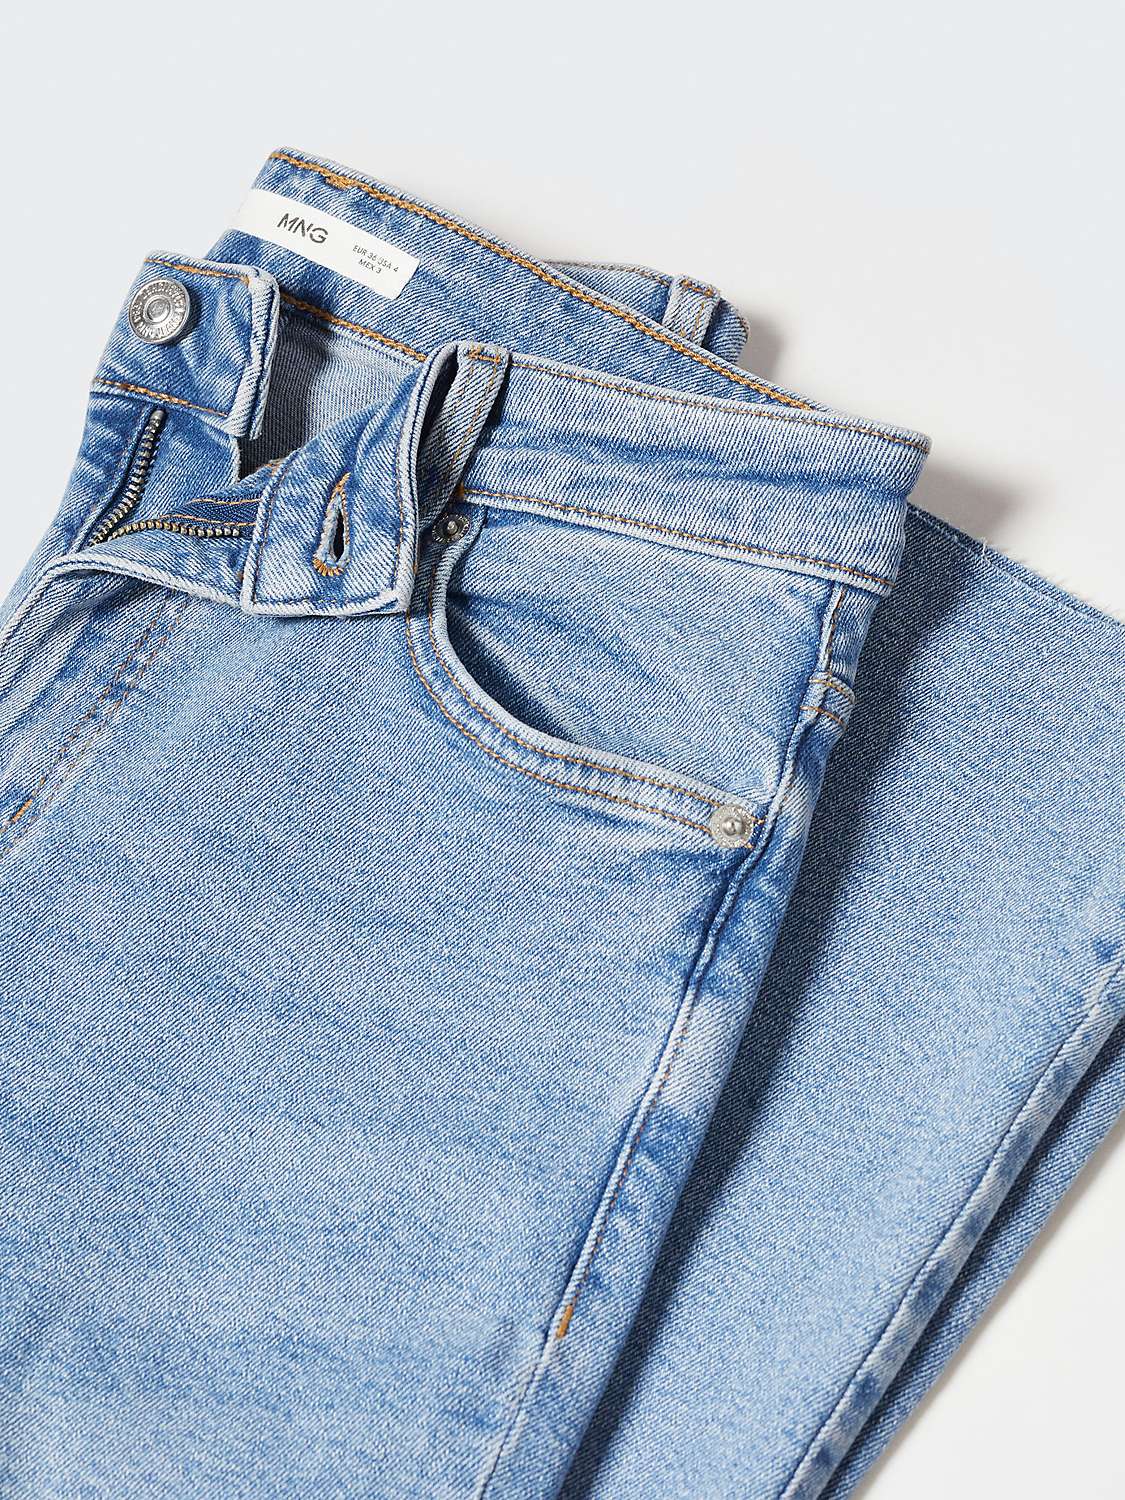 Buy Mango Sienna Crop Flared Jeans, Blue Online at johnlewis.com